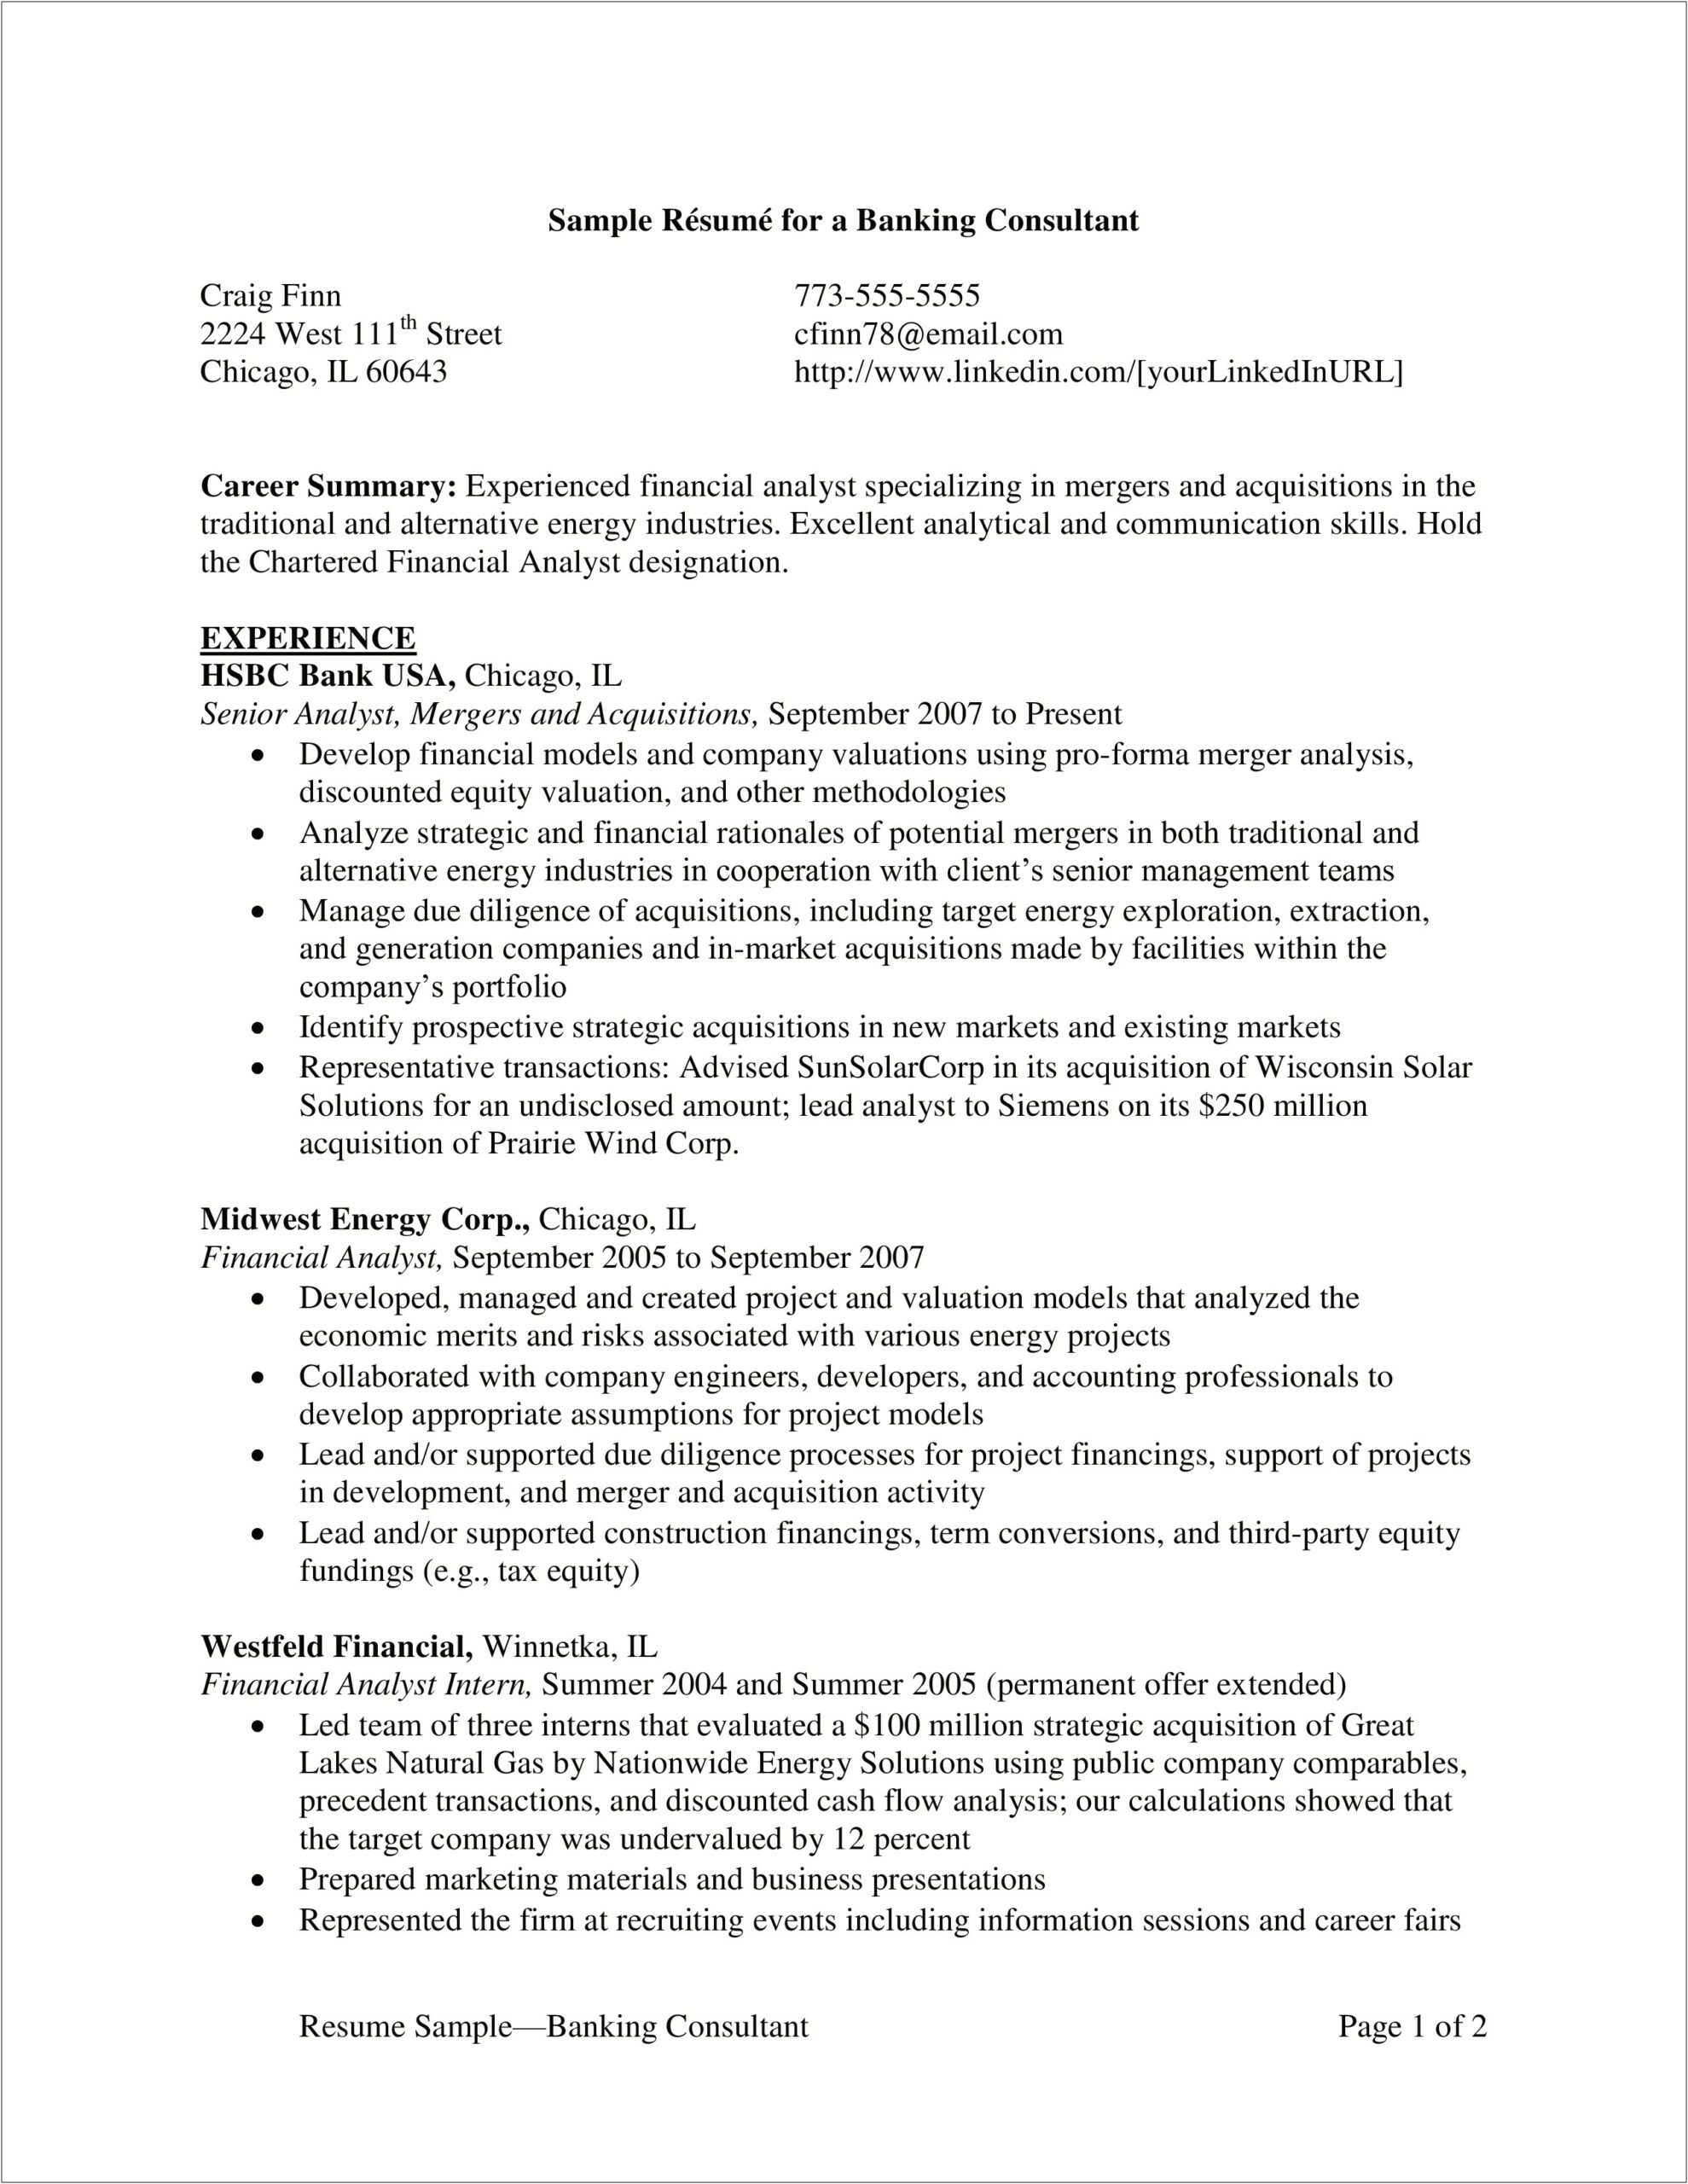 Resume Sample Notre Dame Career Center